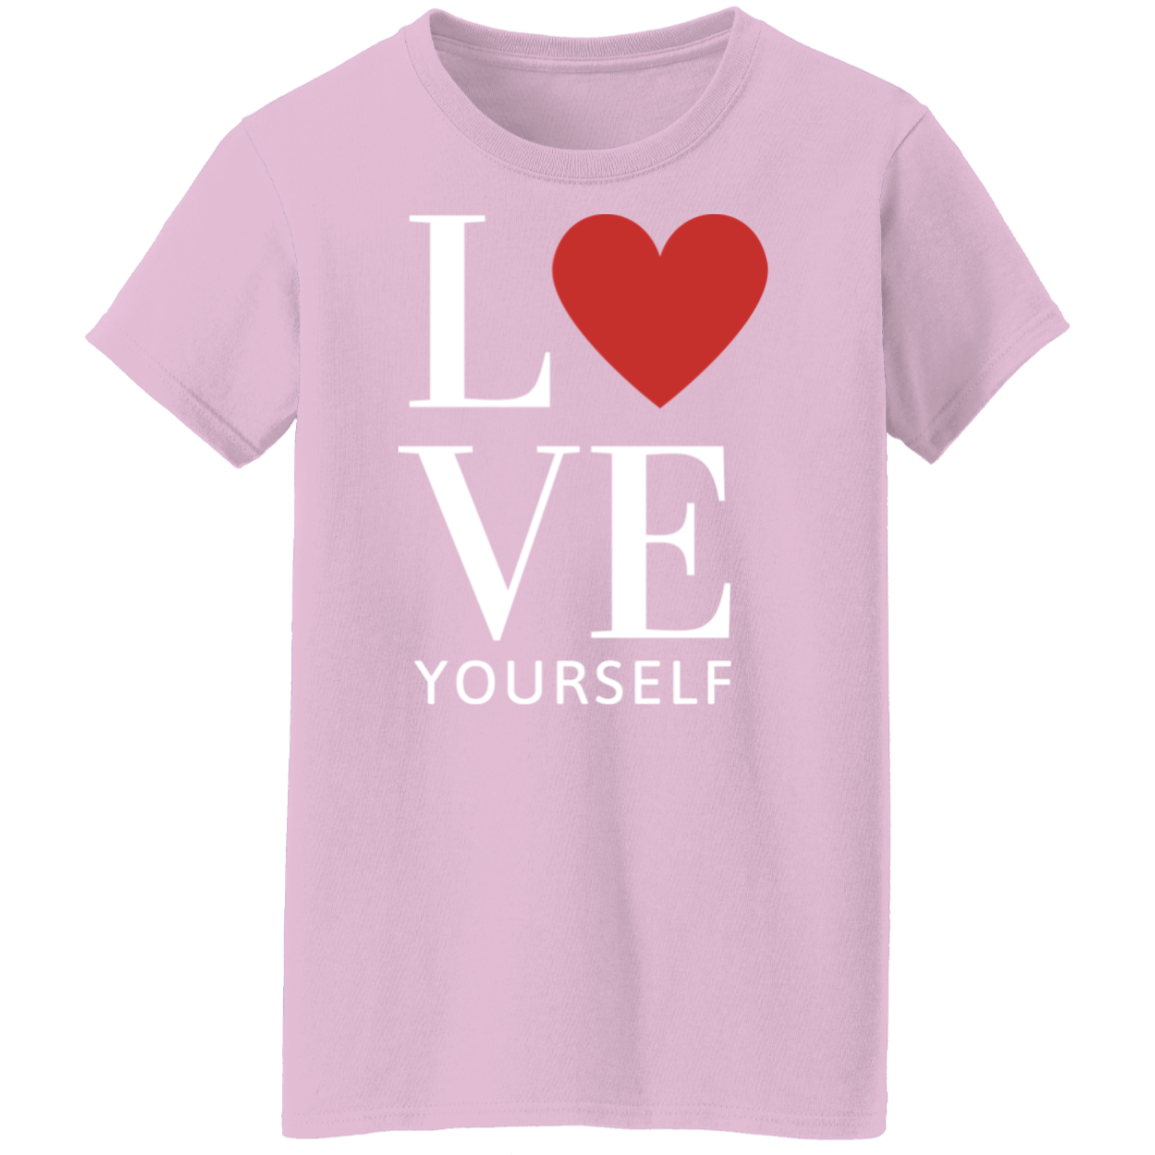 Love Yourself T-Shirt